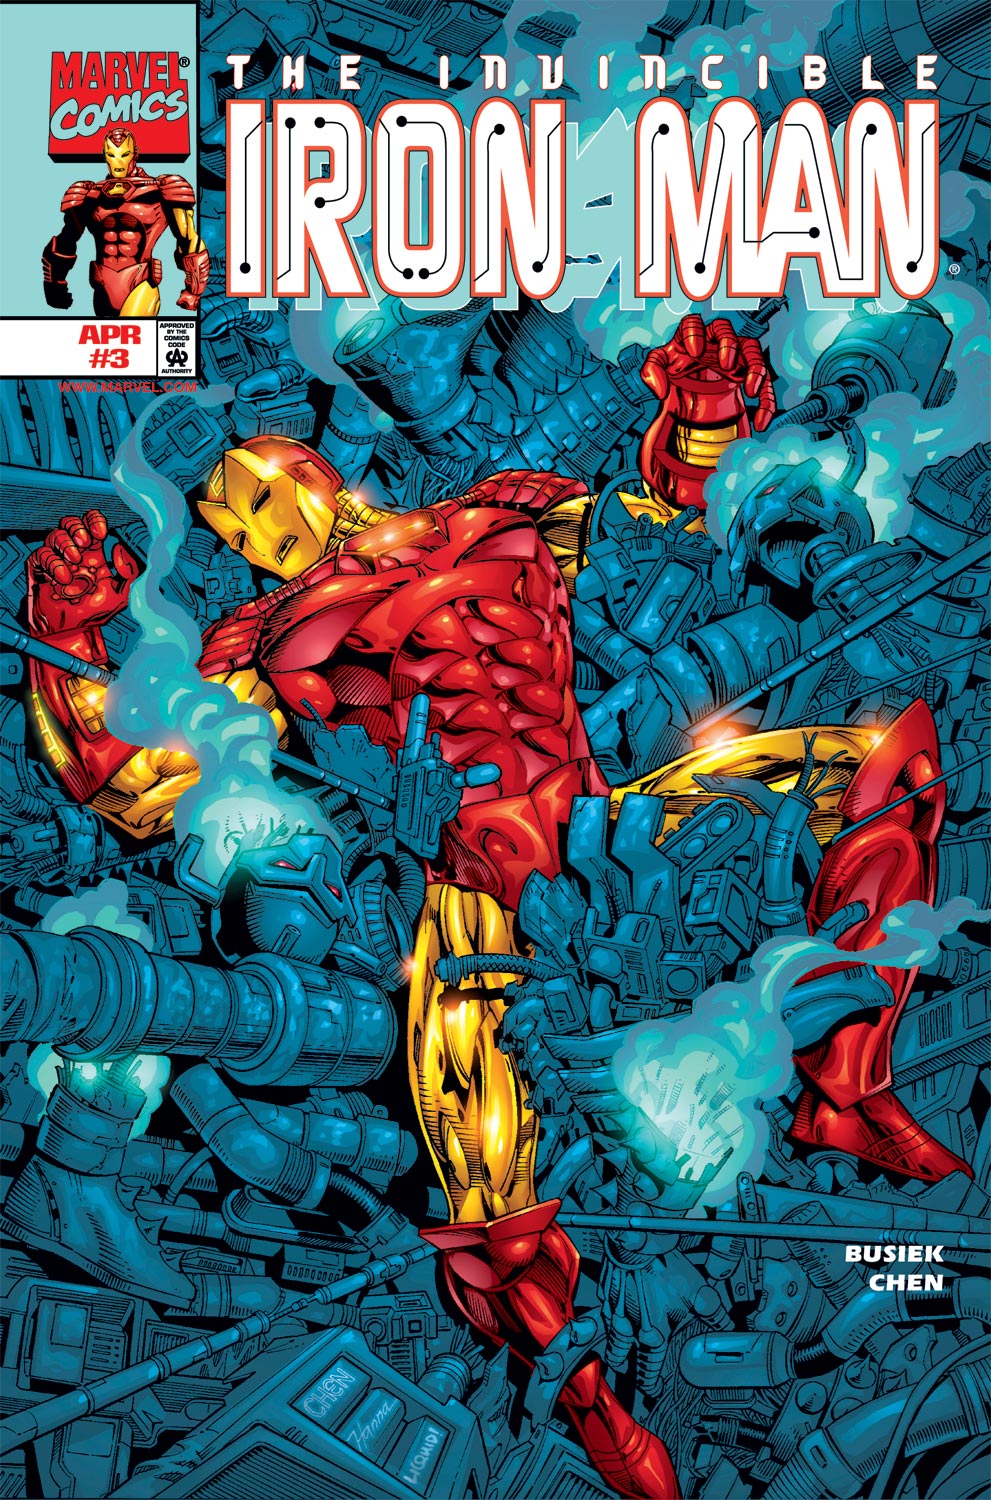 The Invincible Iron Man No.1 Vol.3 1998 Kurt Busiek & Sean Chen 